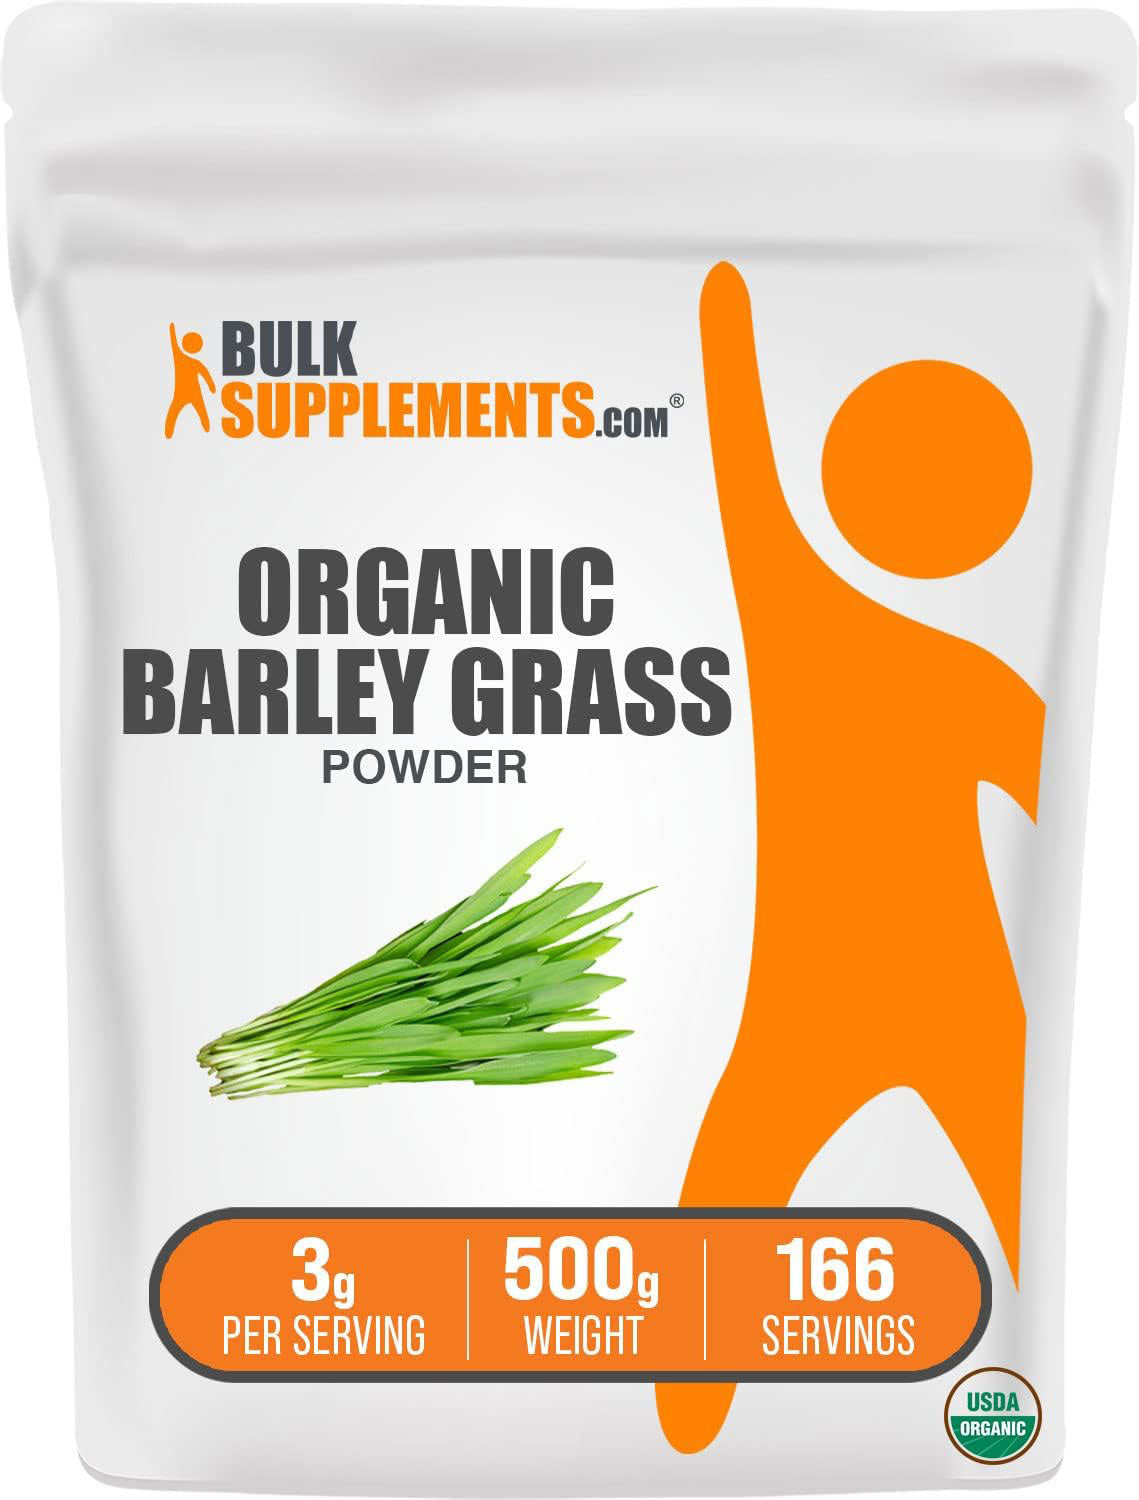 BulkSupplements.com Organic Barley Grass Powder 500g Bag